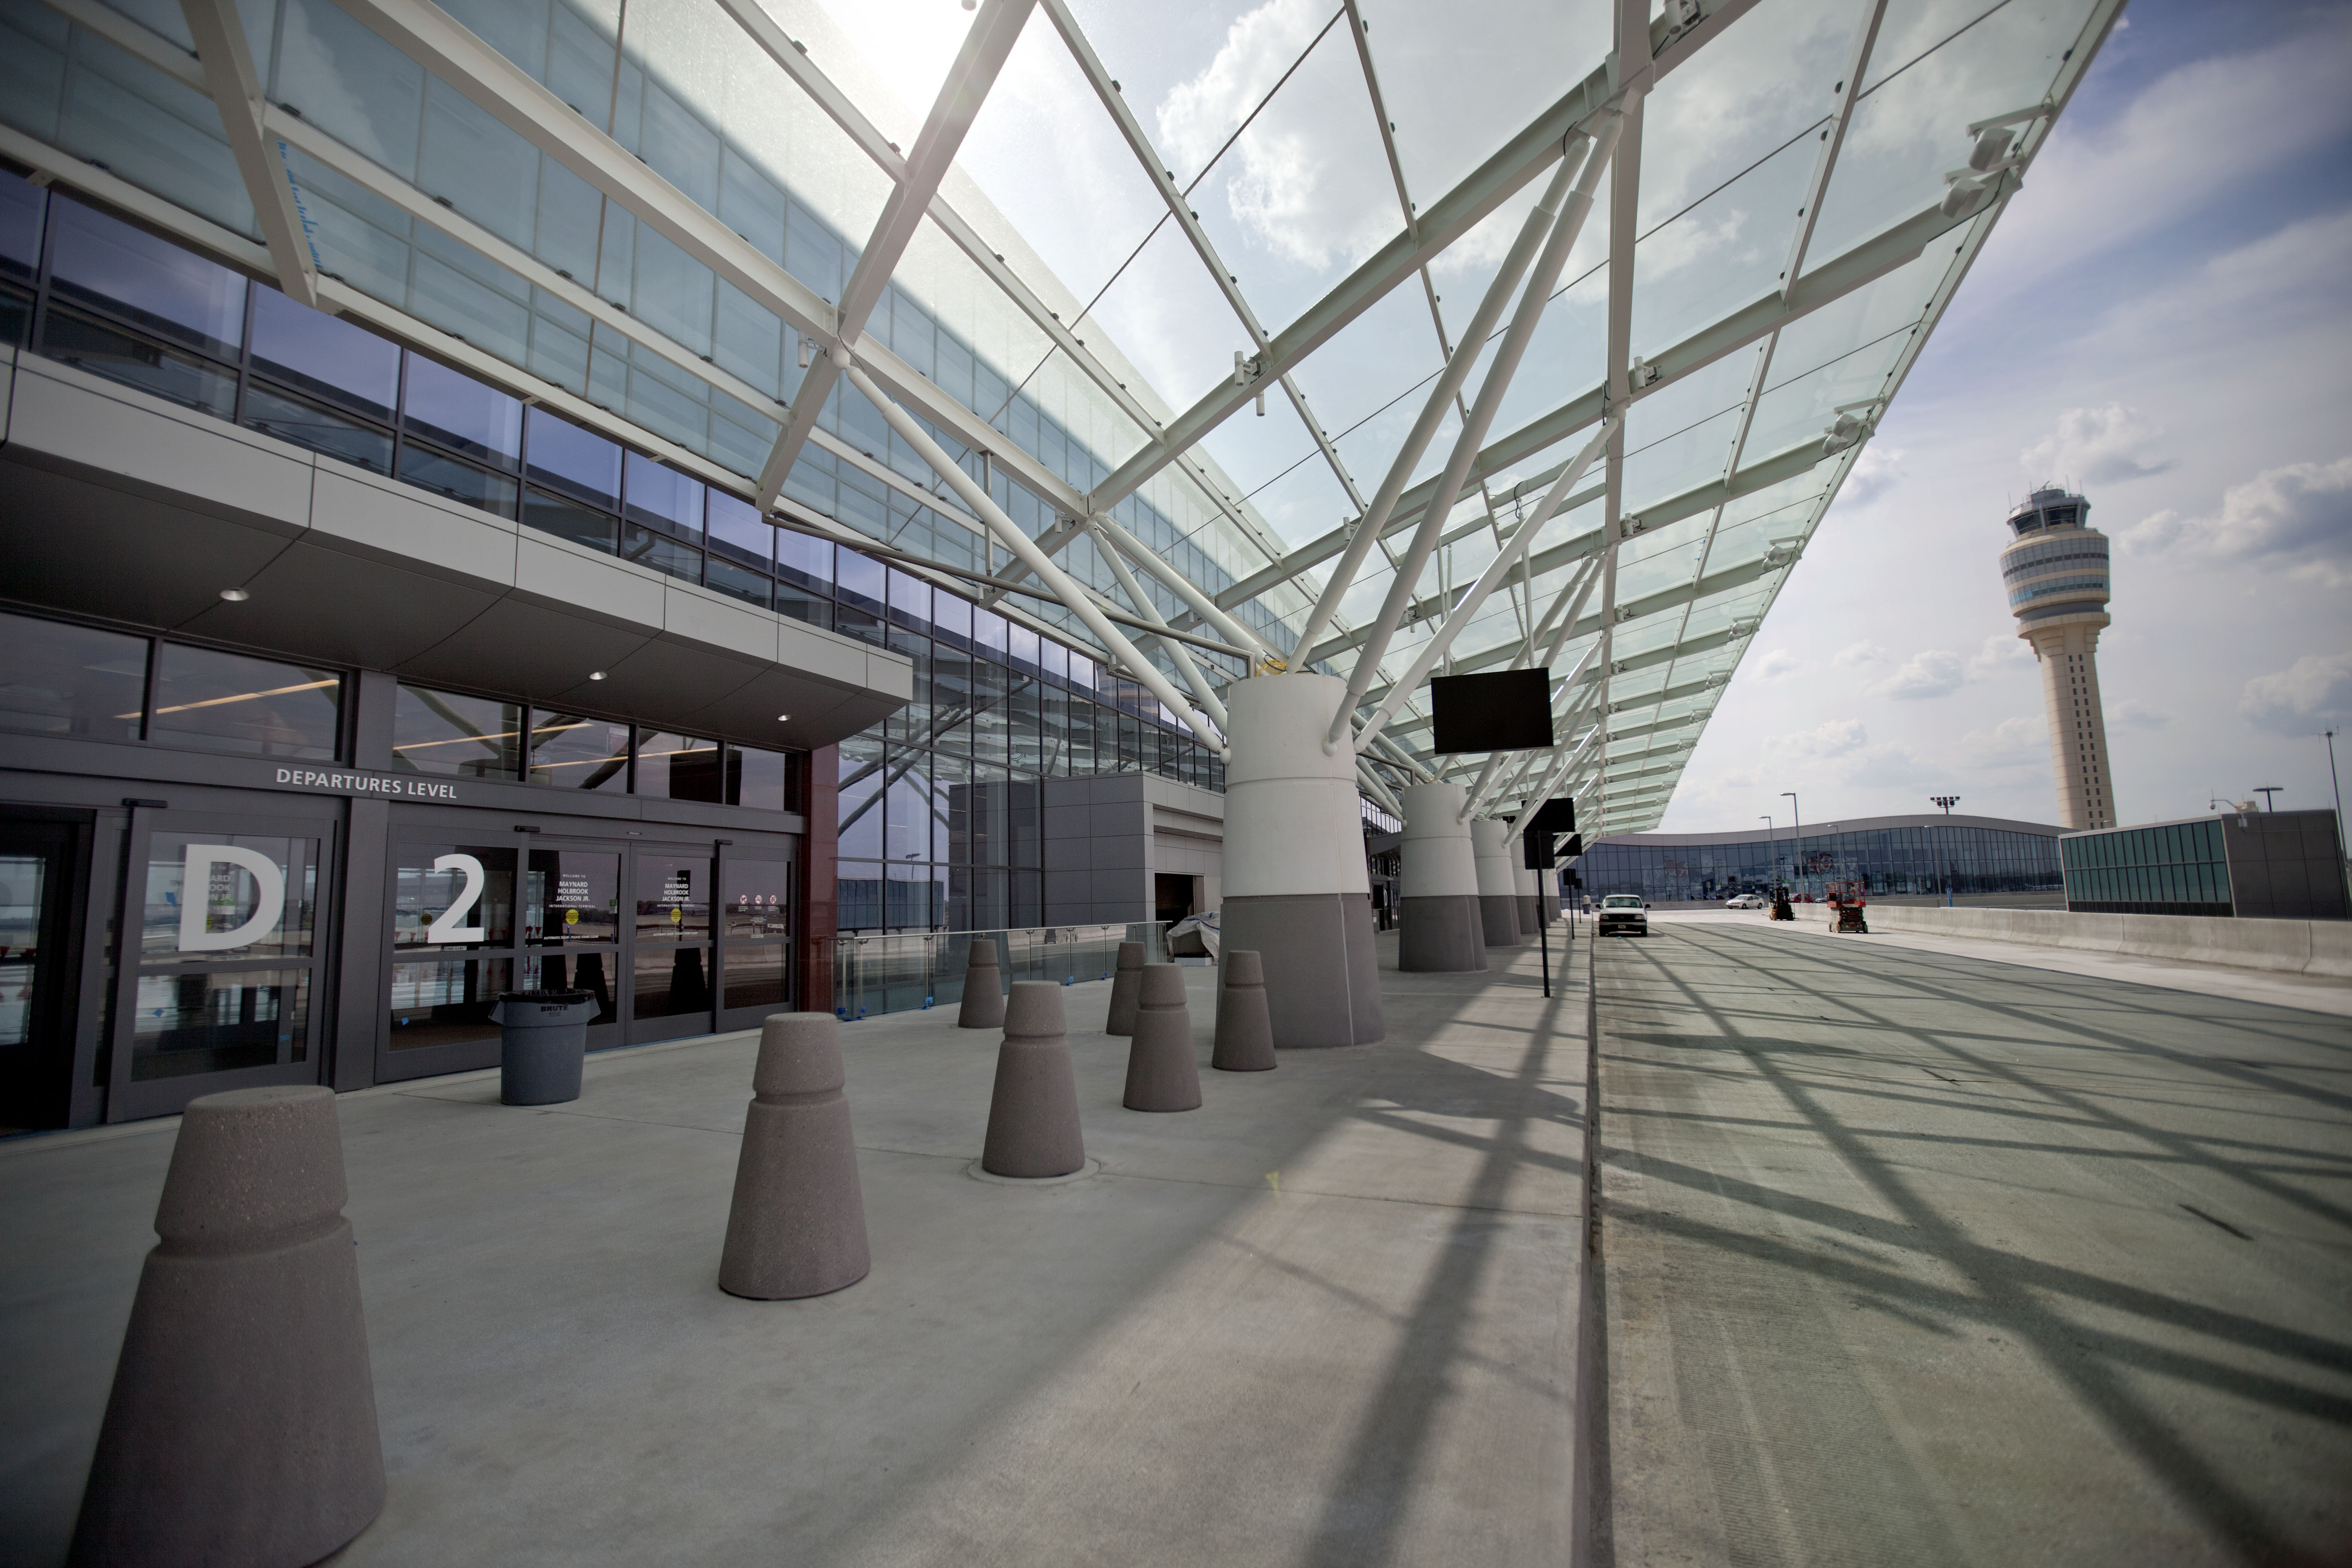 Atlanta HartsfieldJackson International Airport Guide